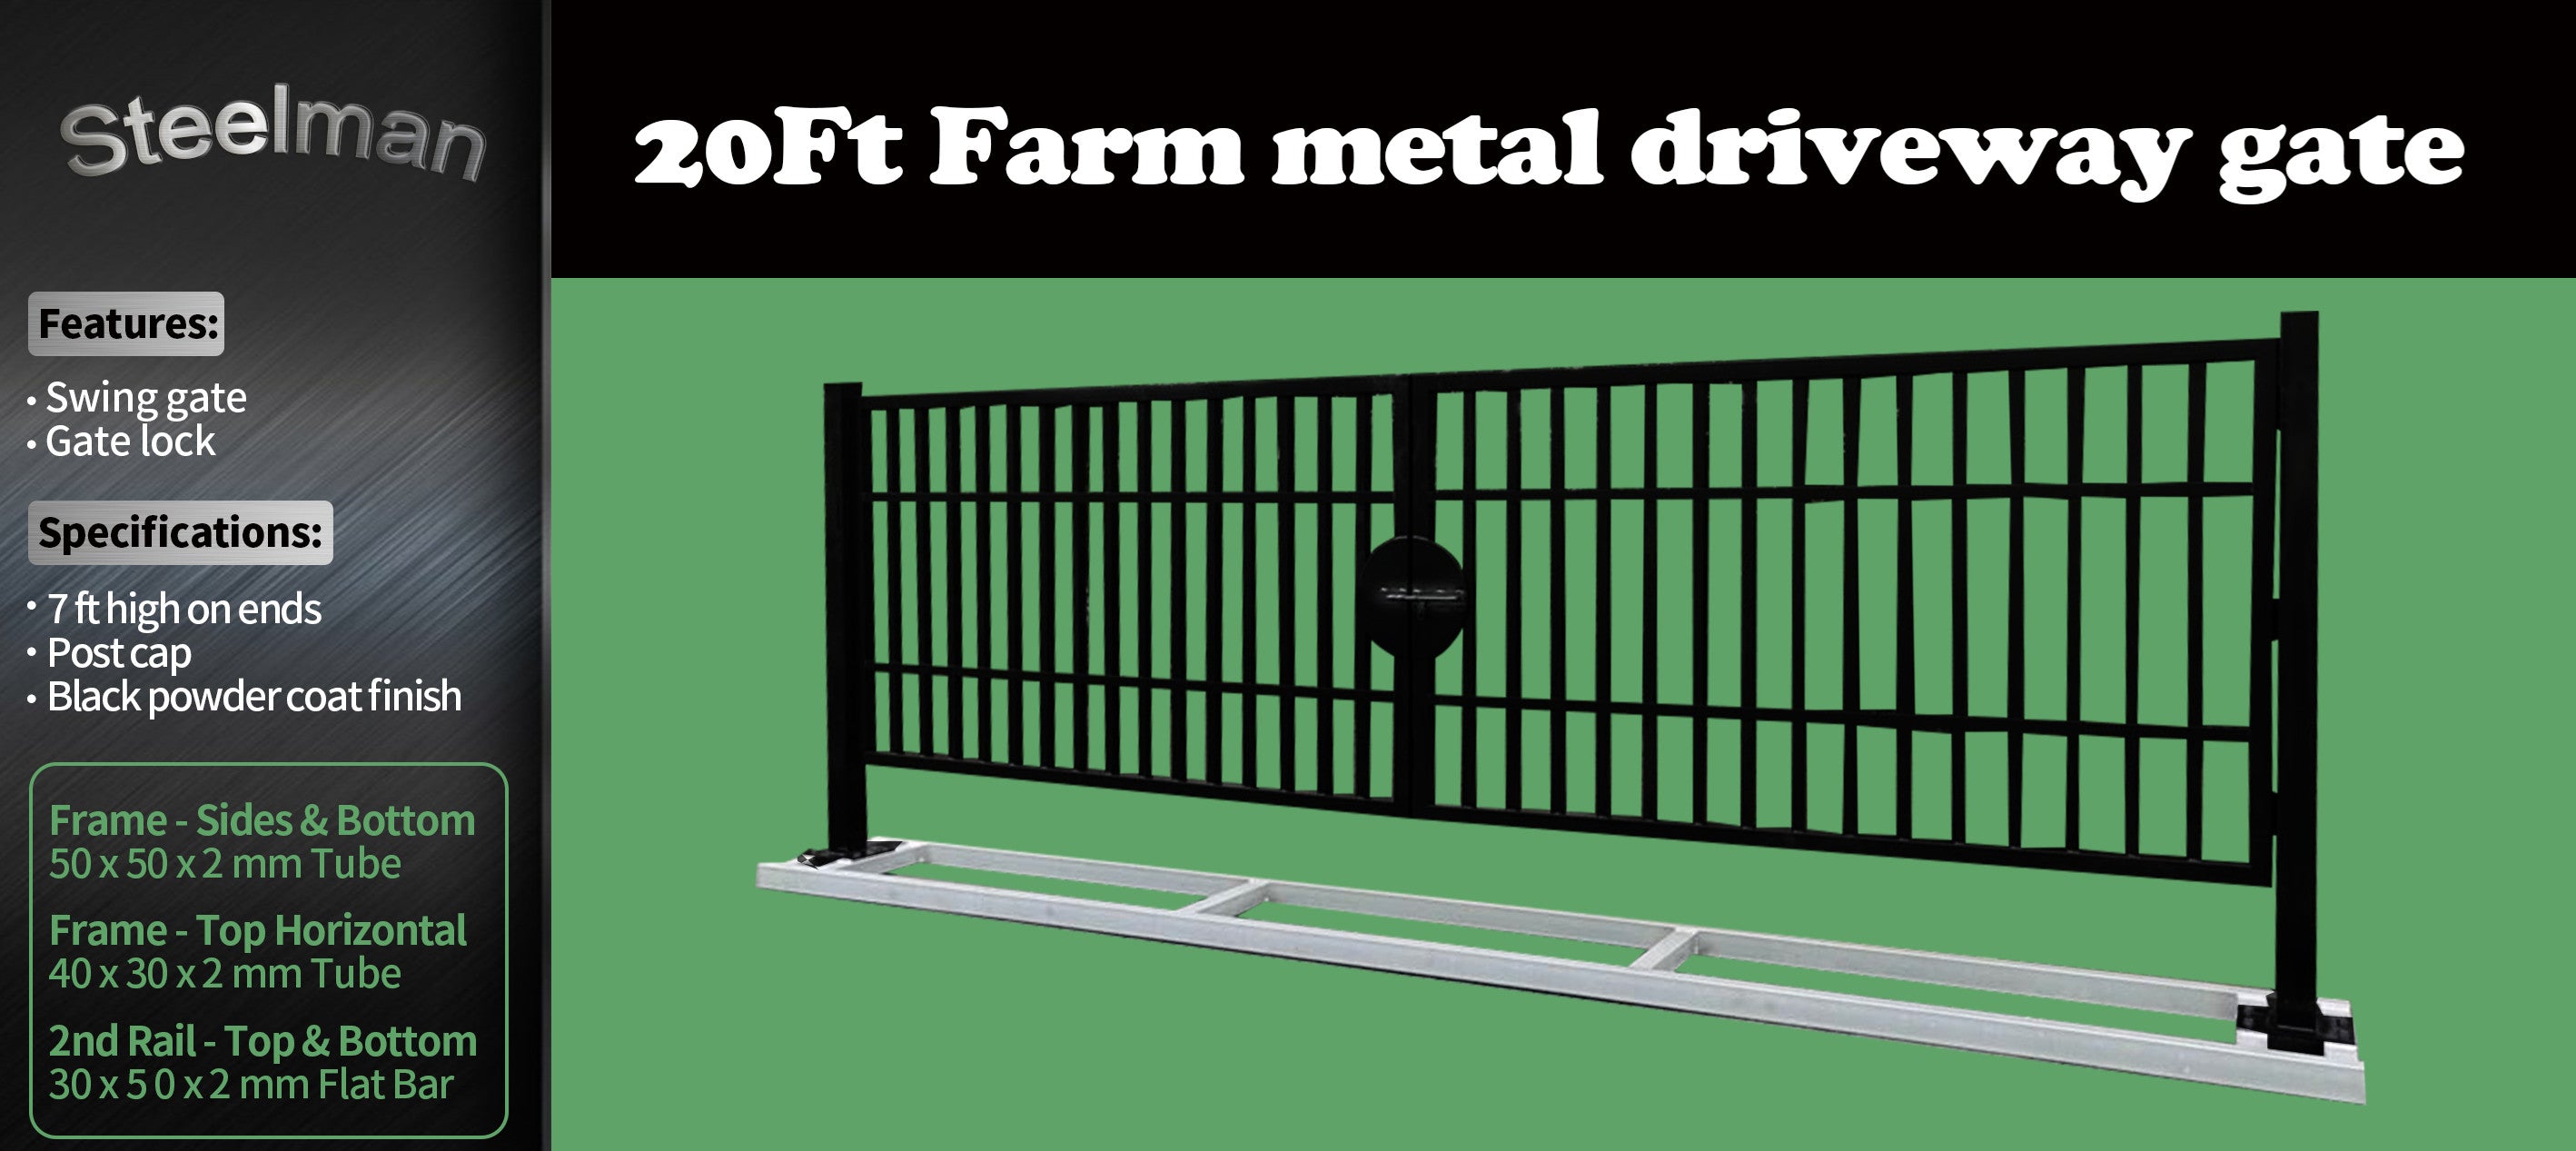 Steelman 20ft Farm Metal Driveway Gate